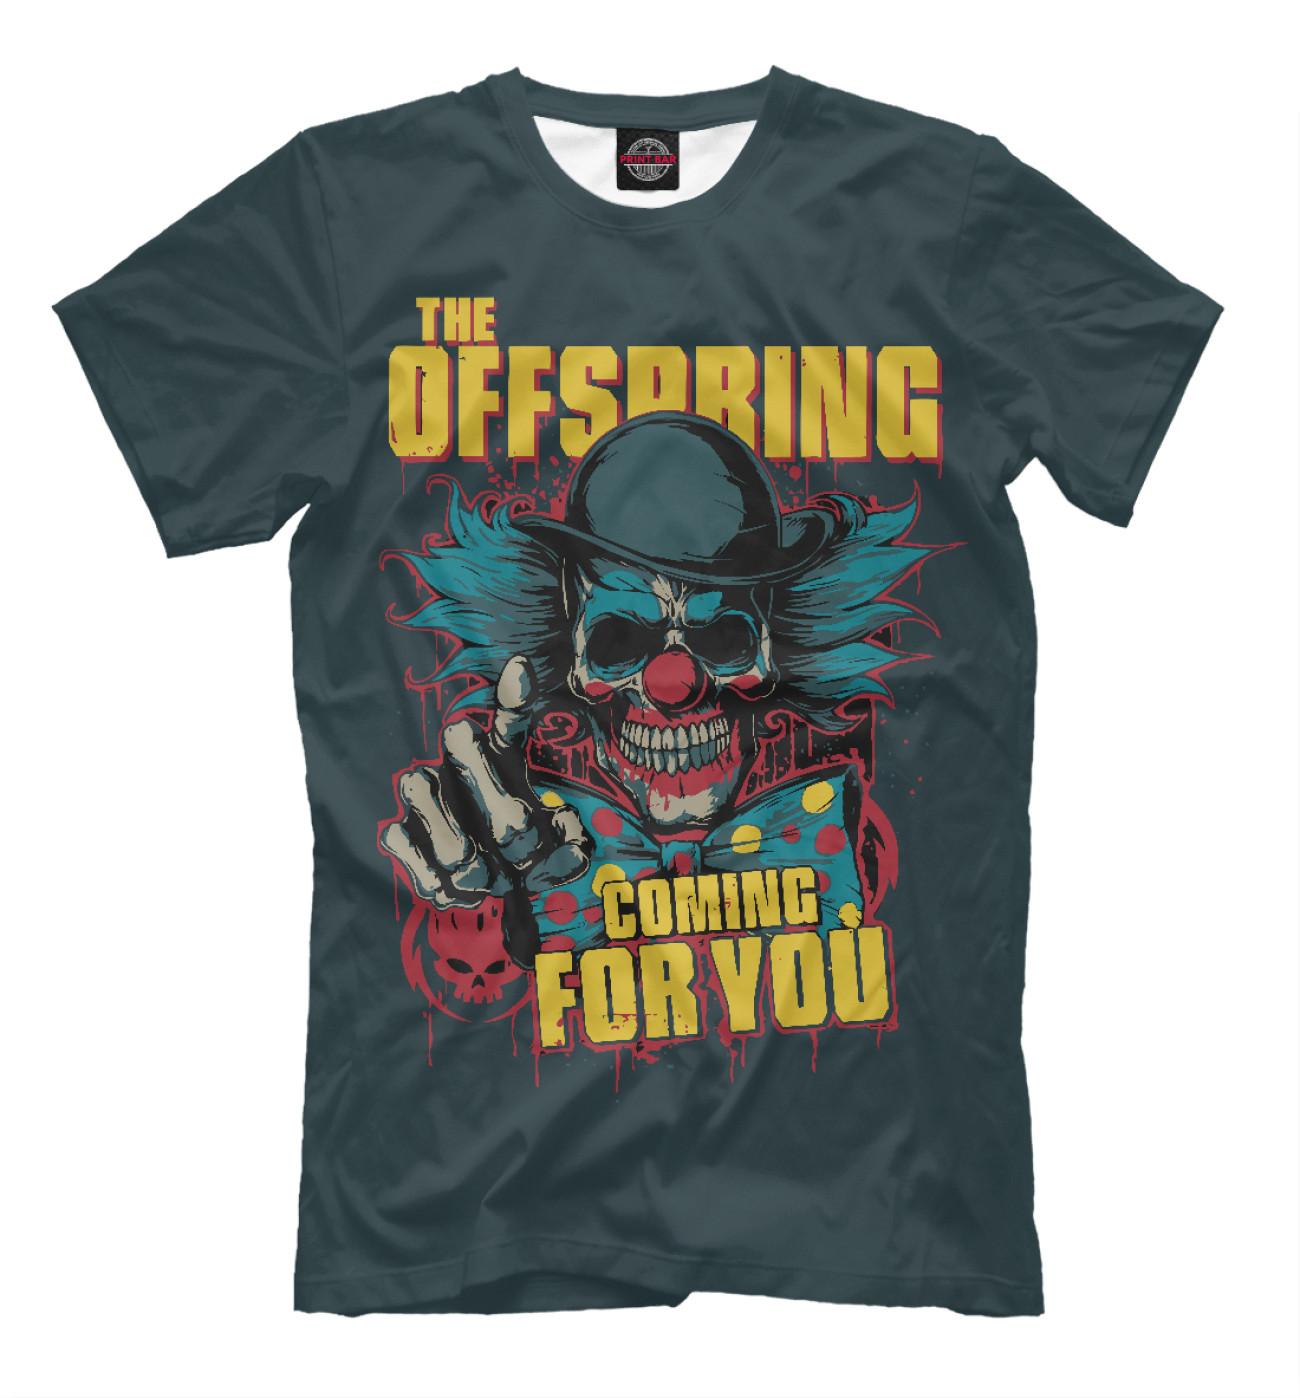 Мужская Футболка The Offspring, артикул: OFS-468560-fut-2